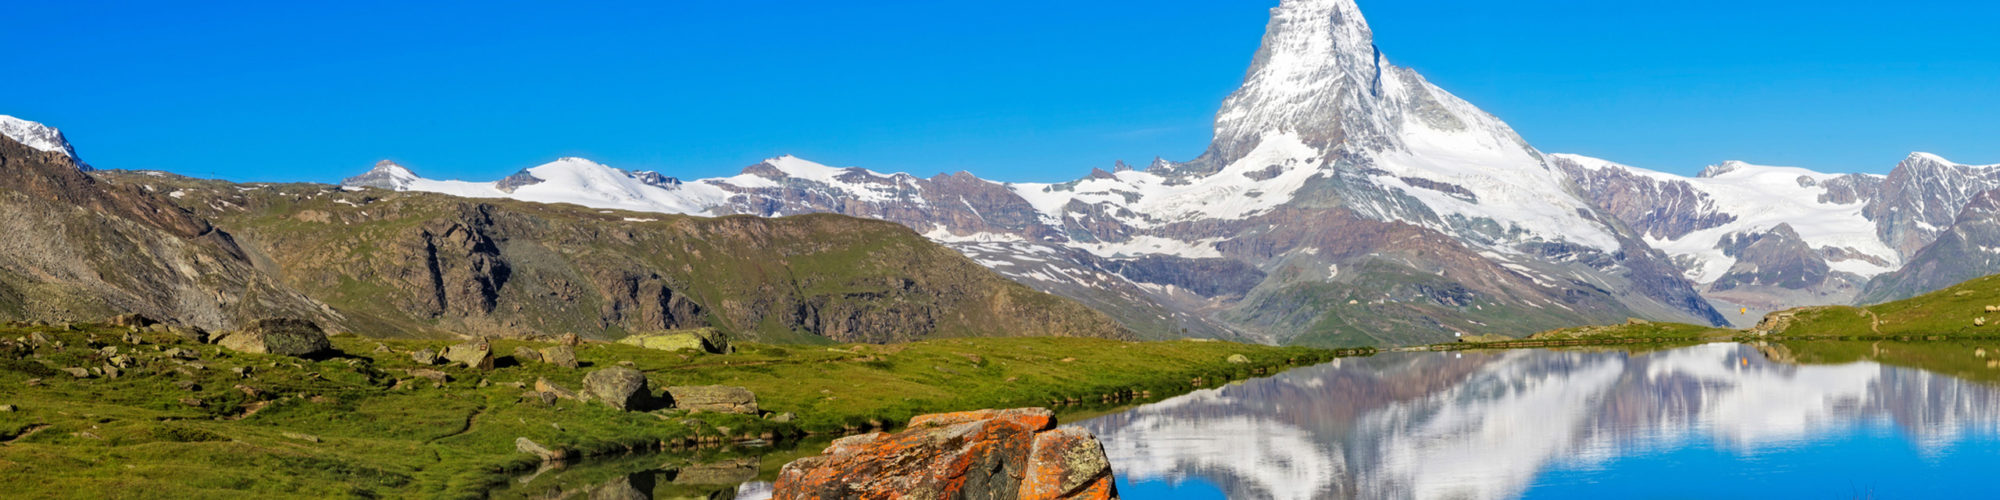 Switzerland Travel travel agents packages deals